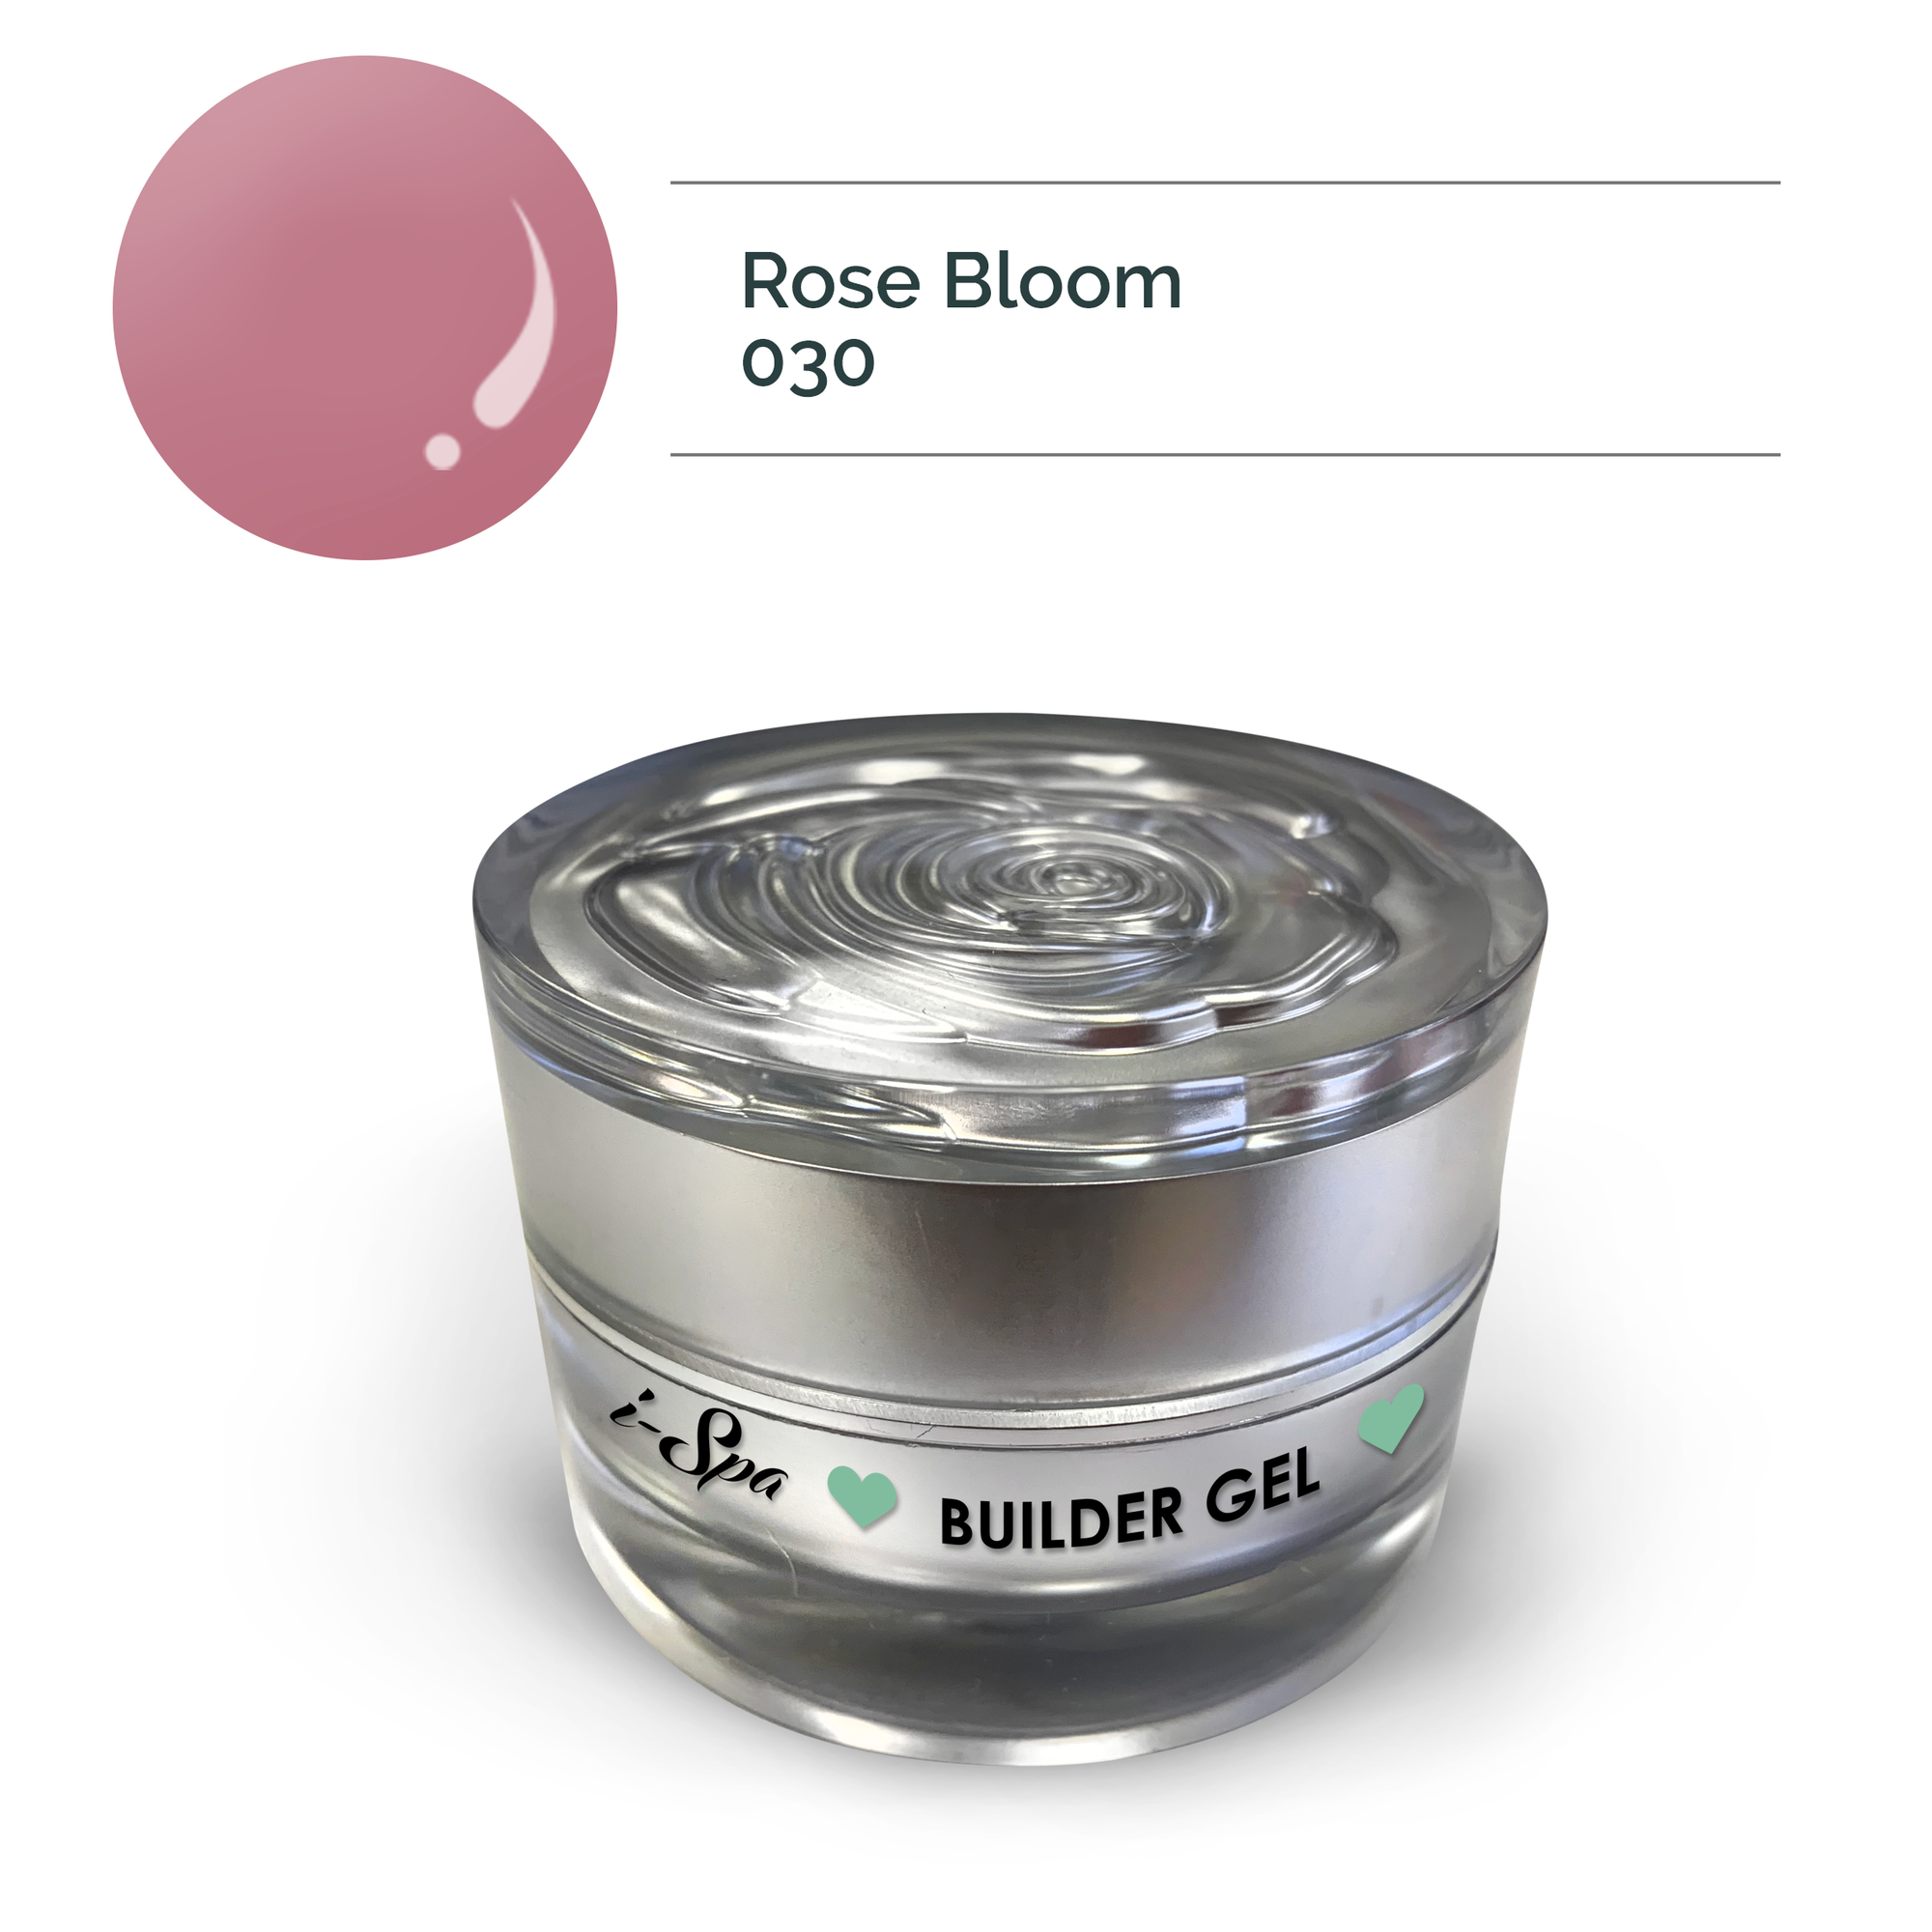 Builder gel 030 - Rose Bloom | 20g